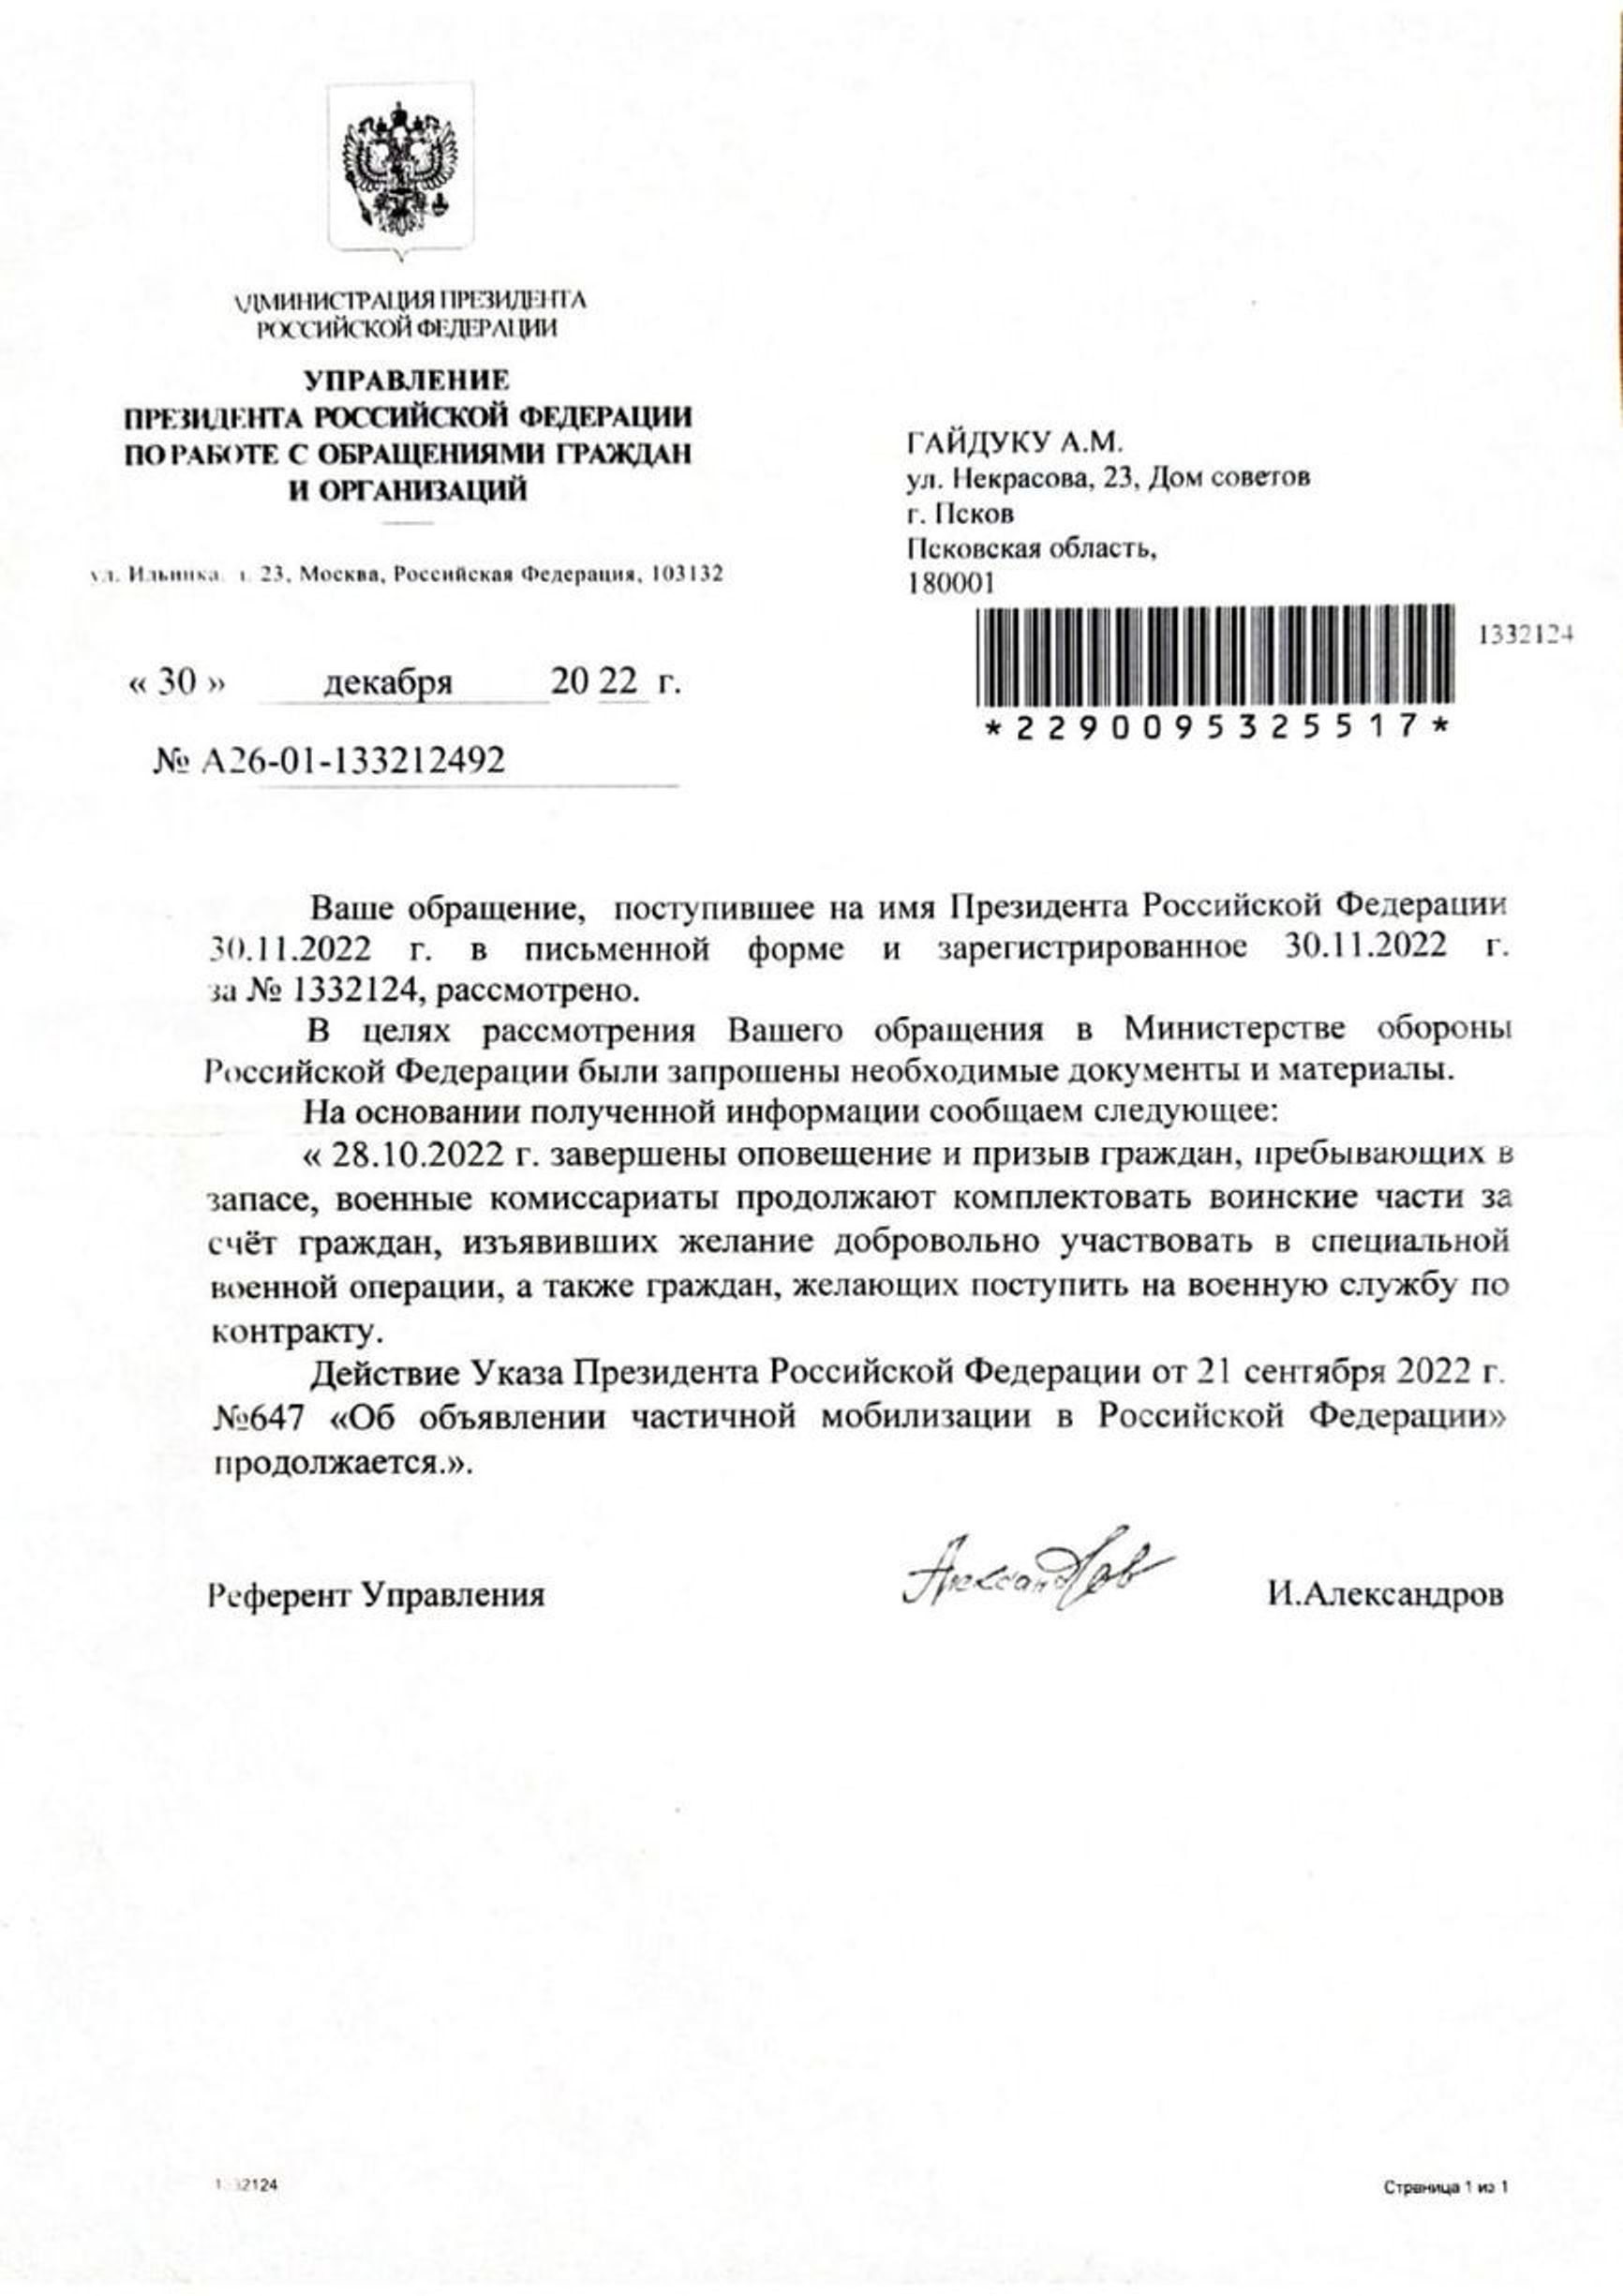 Written response from the Kremlin confirming Vladimir Putin's mobilization decree is still in force